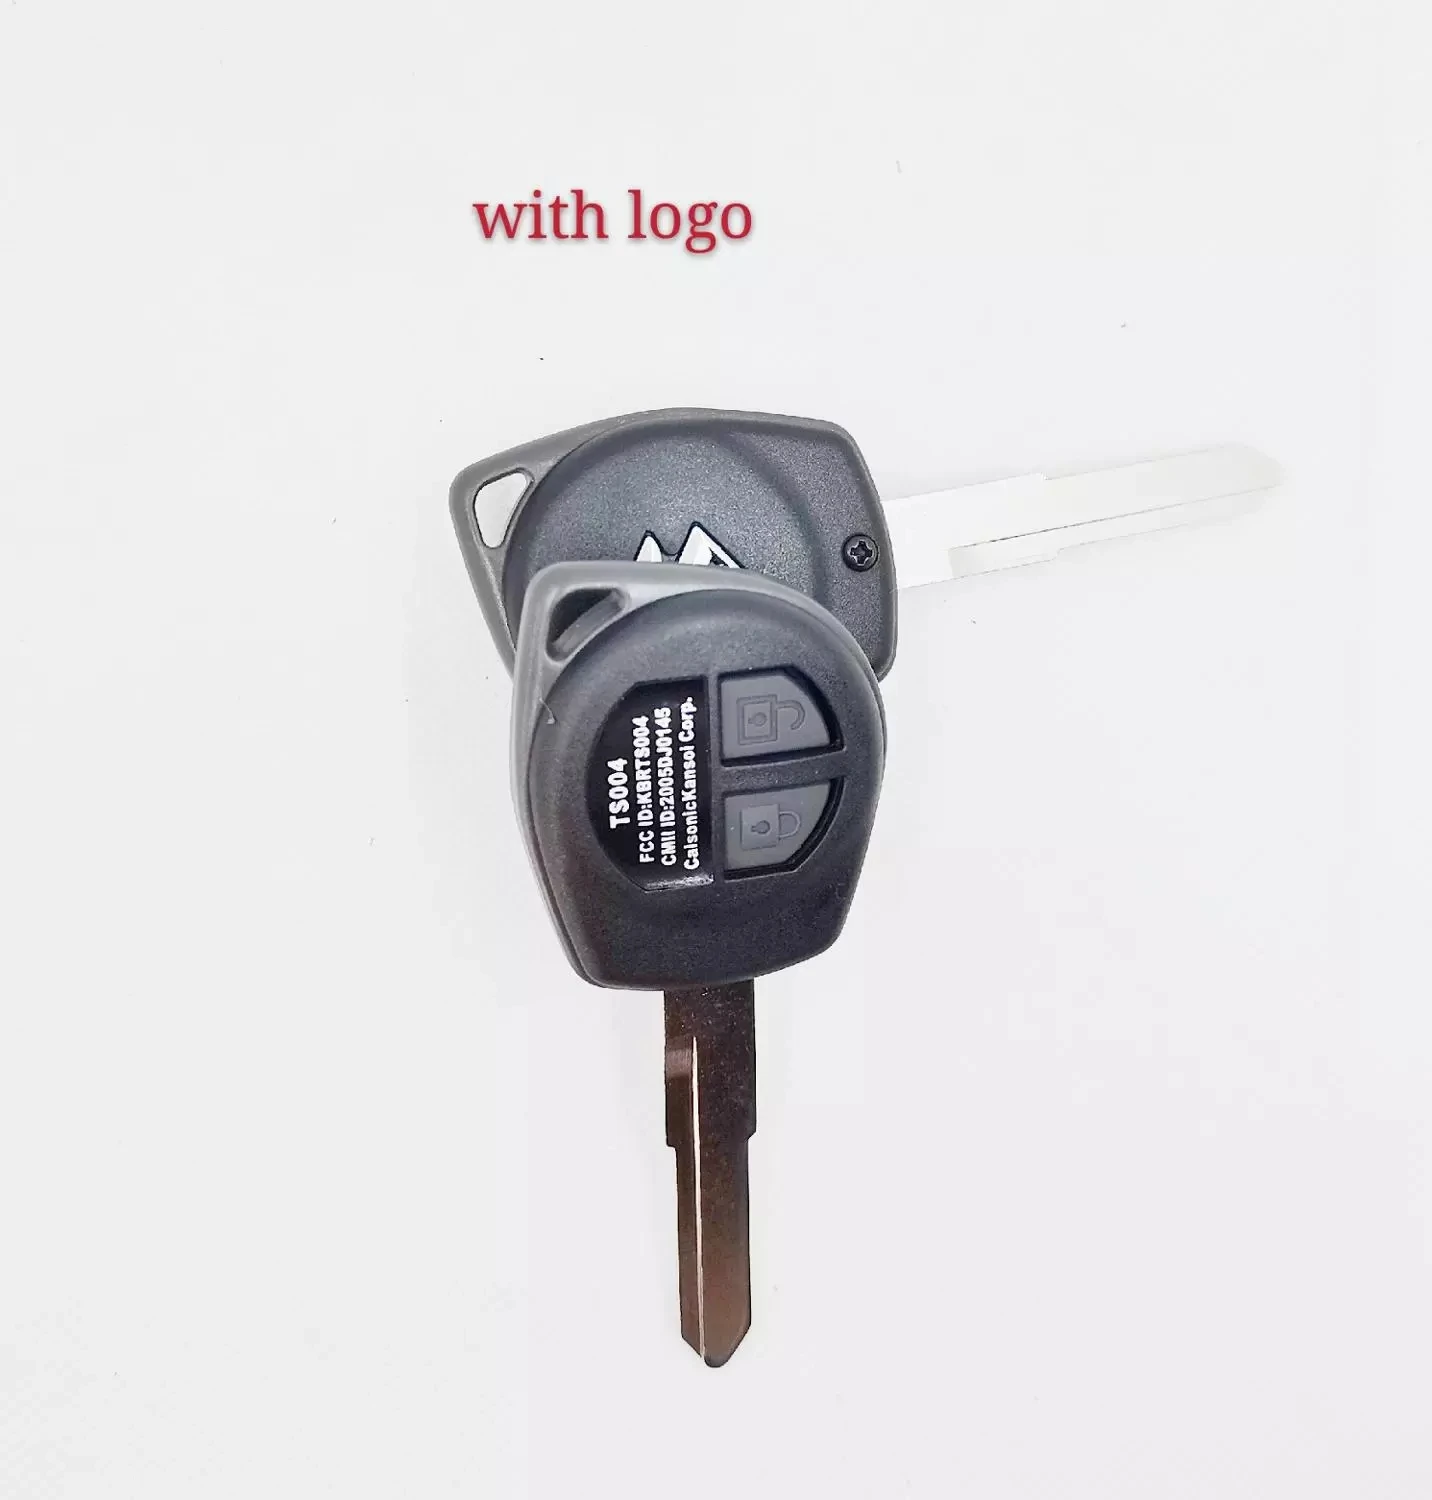 

With LOGO 2 Button Car Blank Key Remote Case Cover For Suzuki SX4 Grand Vitara Replacement Flip Key Shell